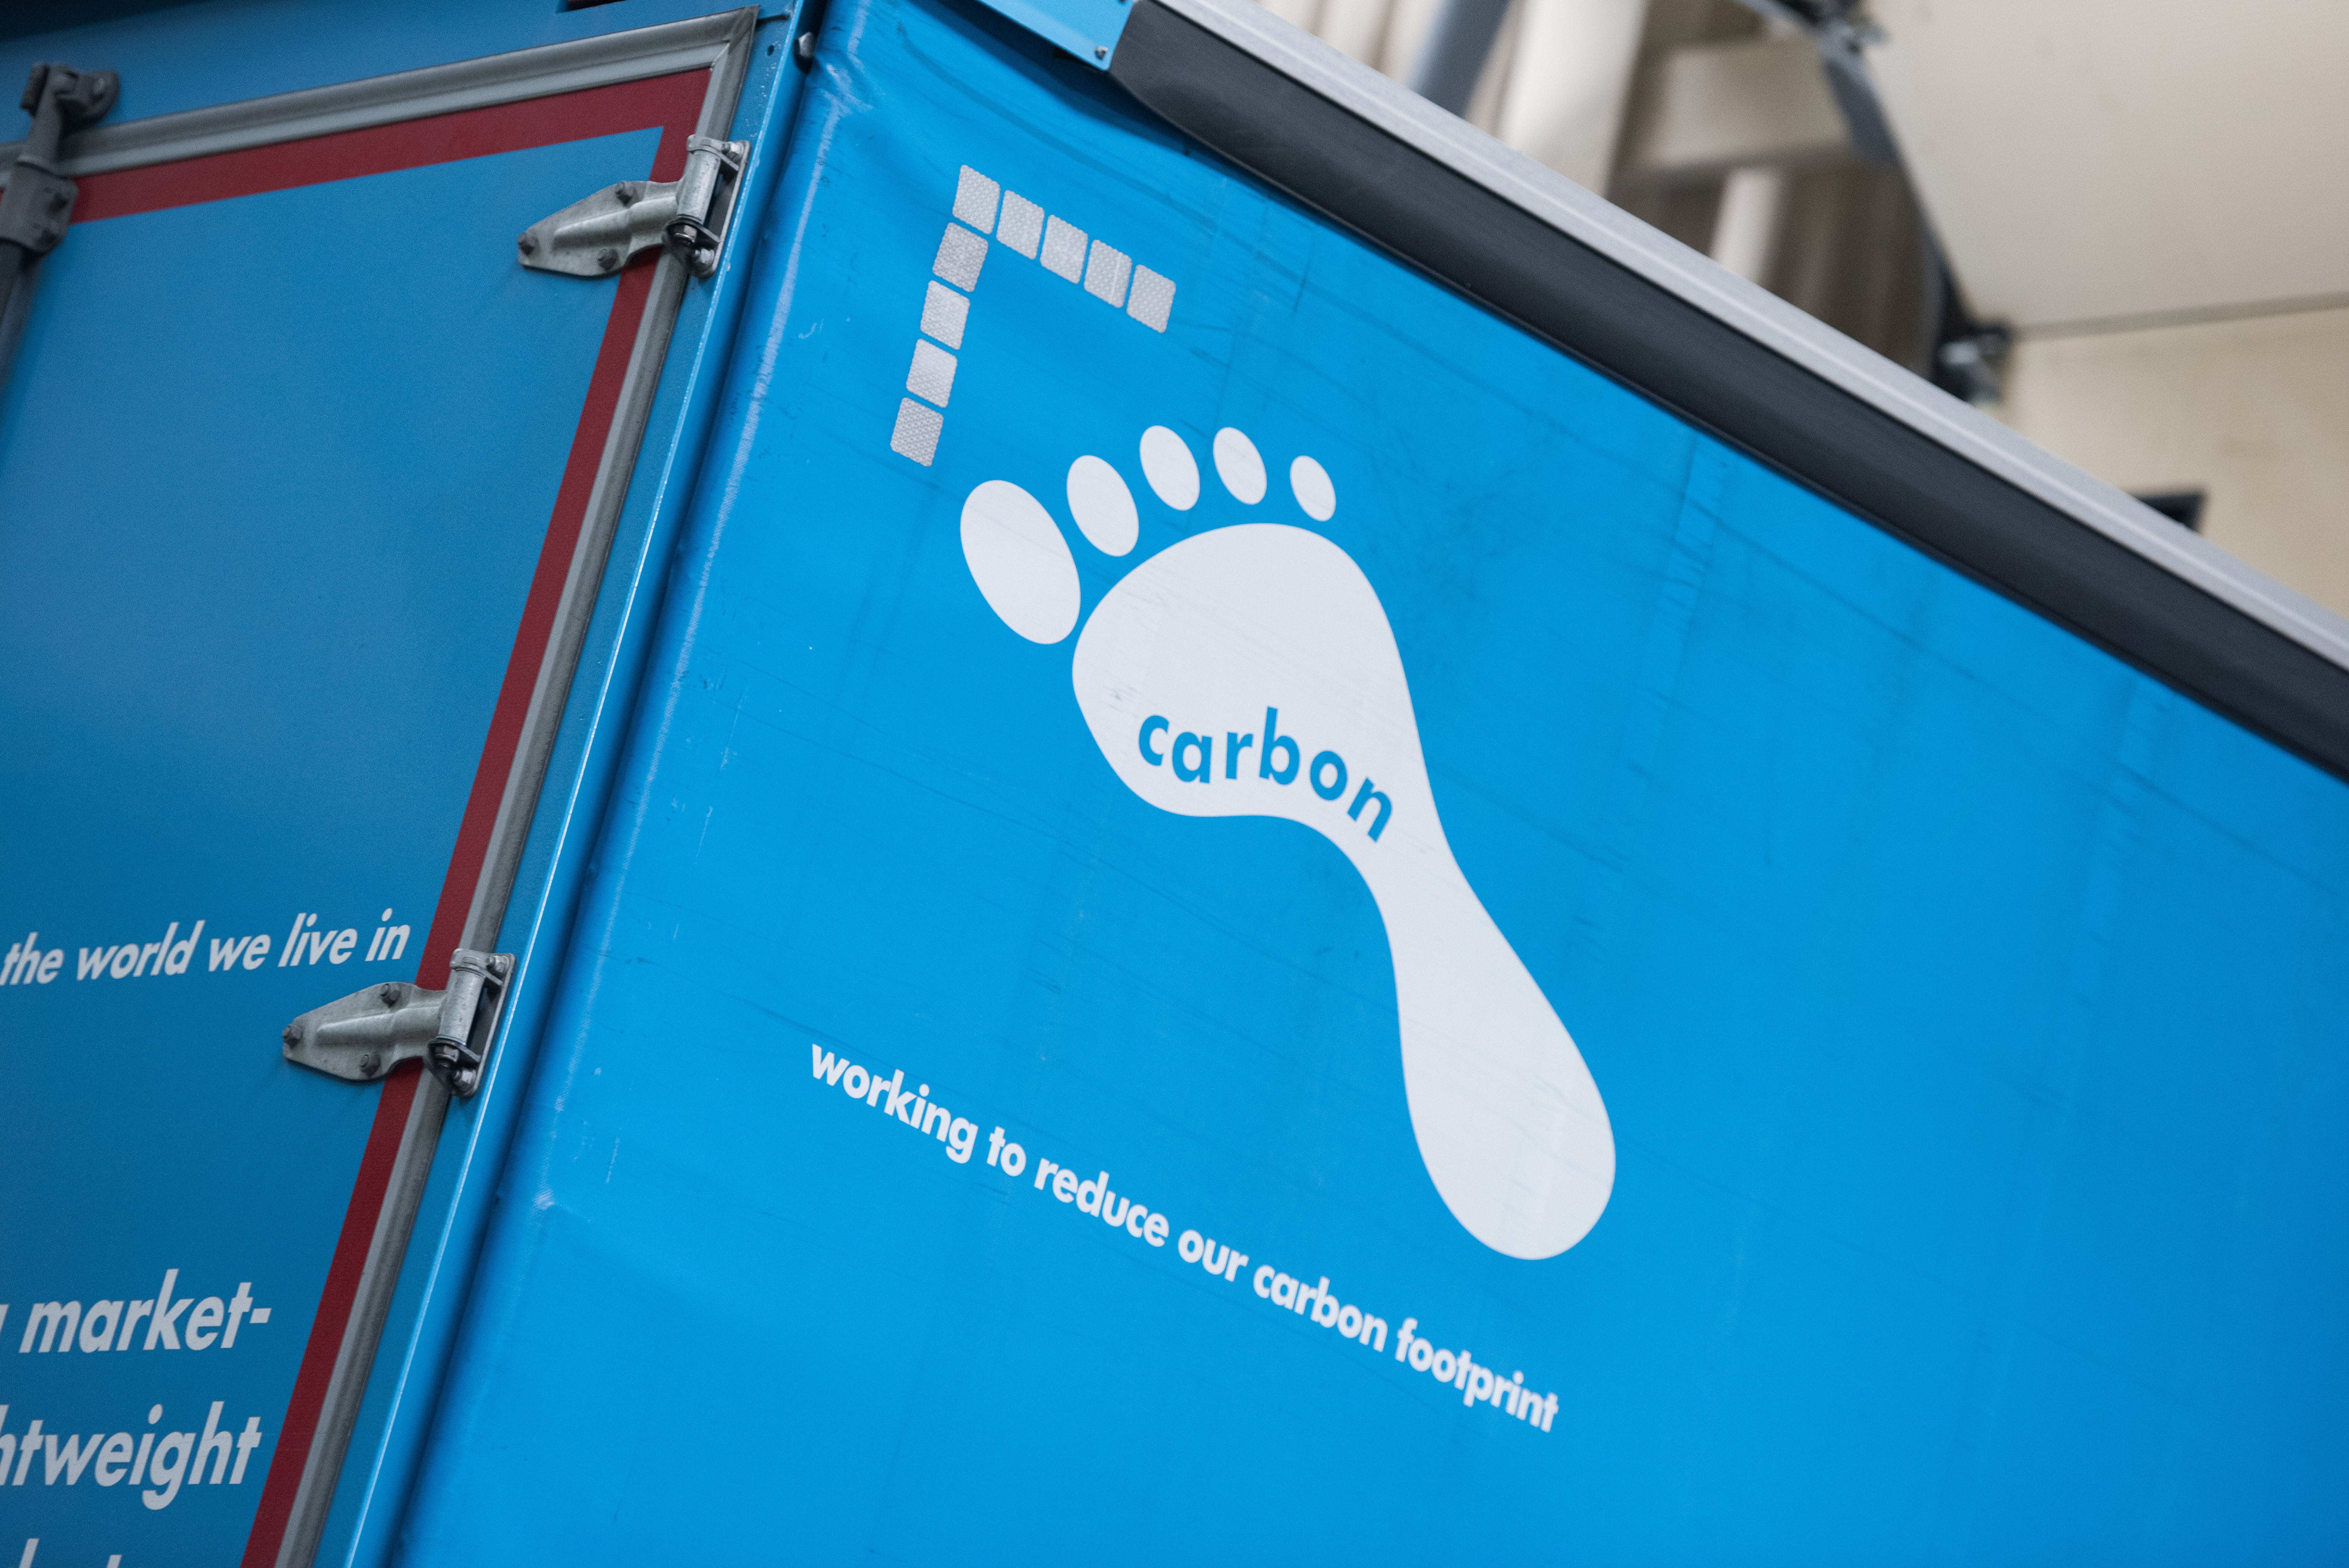 Knauf Truck with Carbon footprint logo